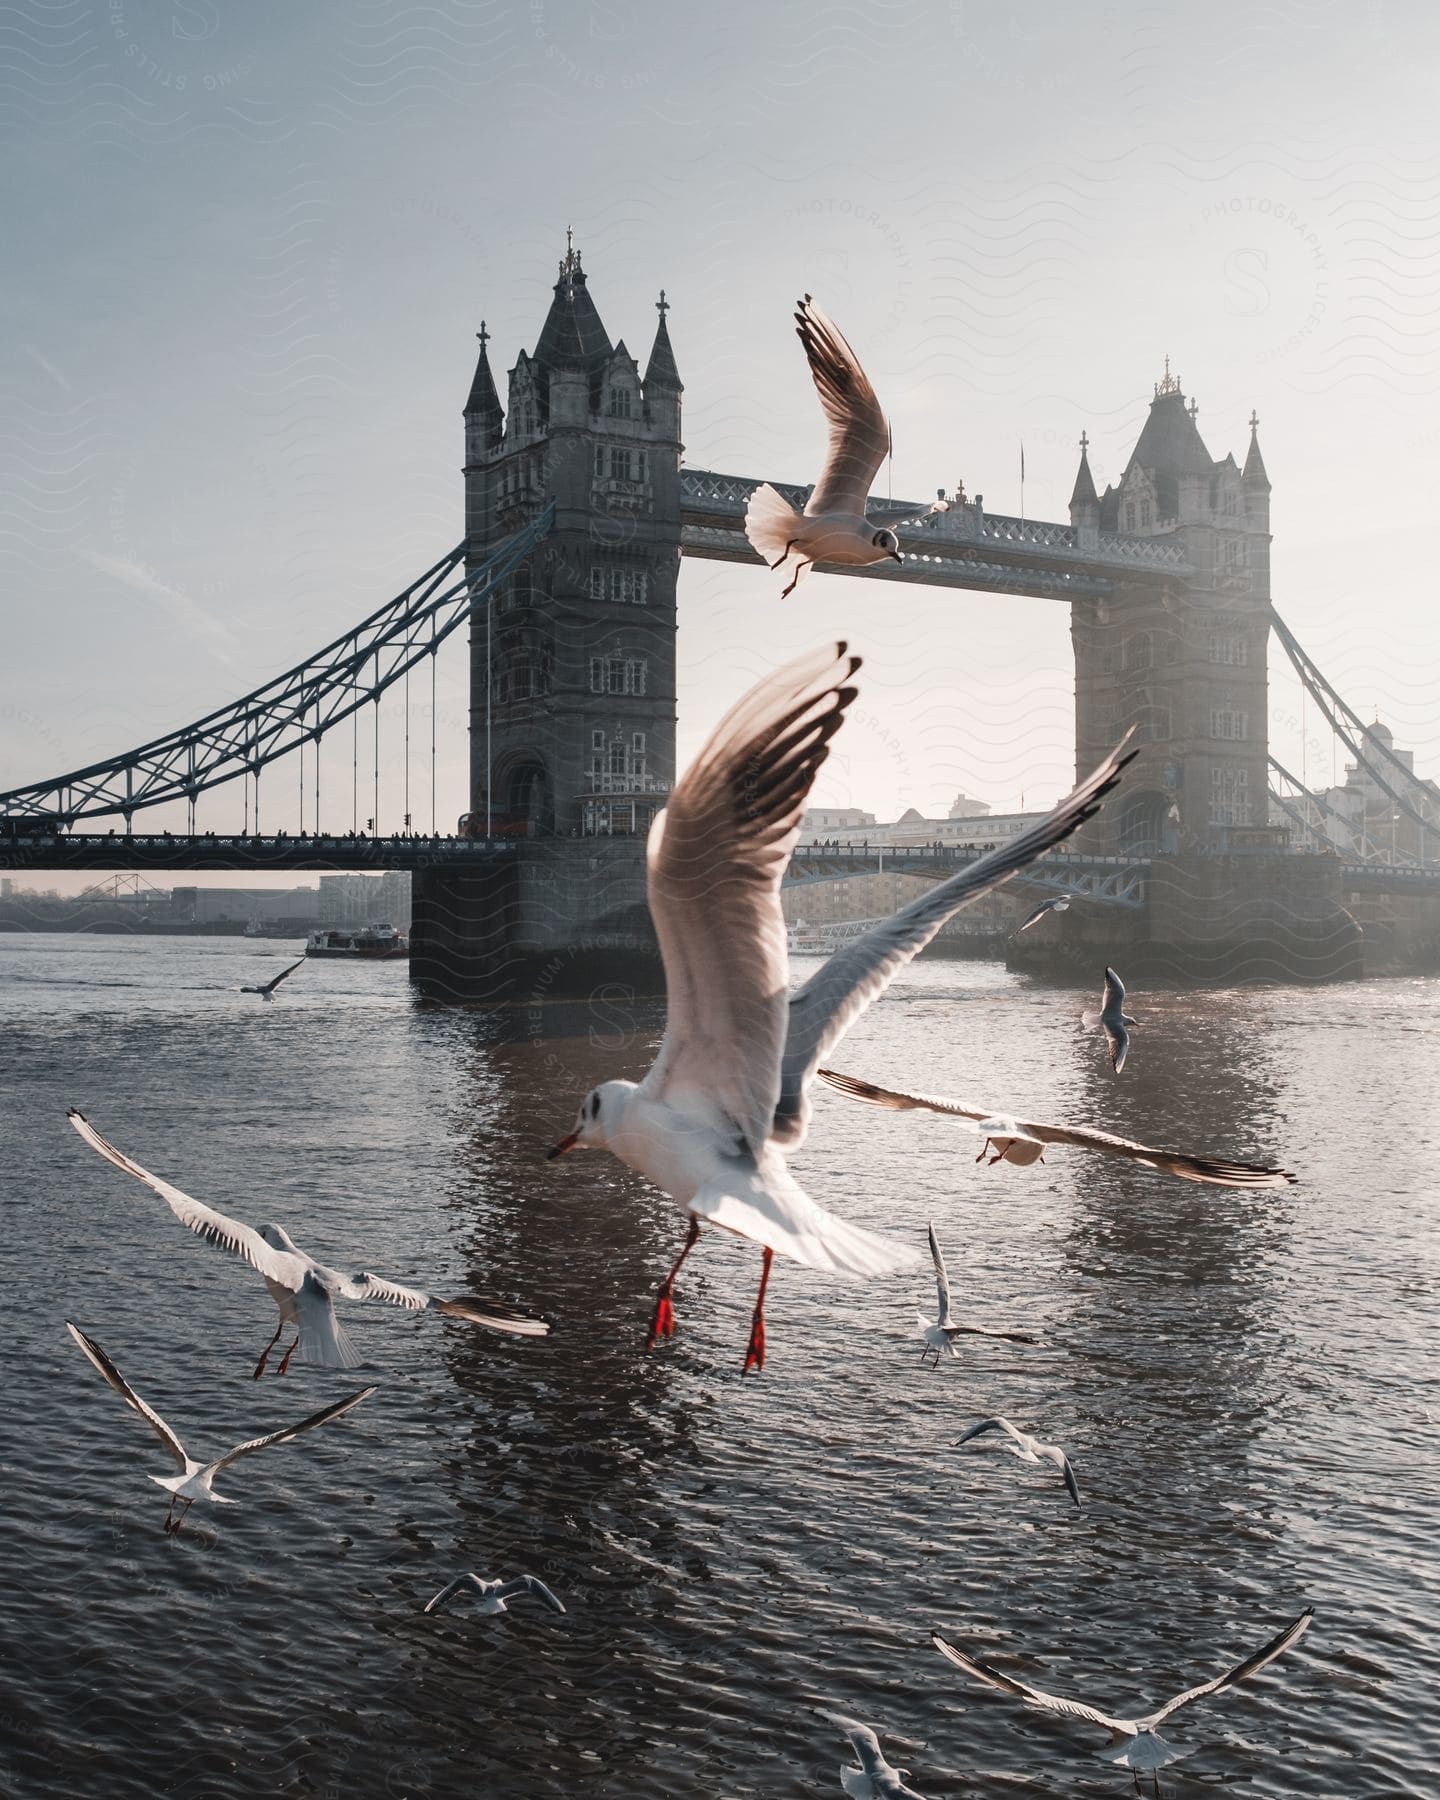 birds land on the water near a city bridge